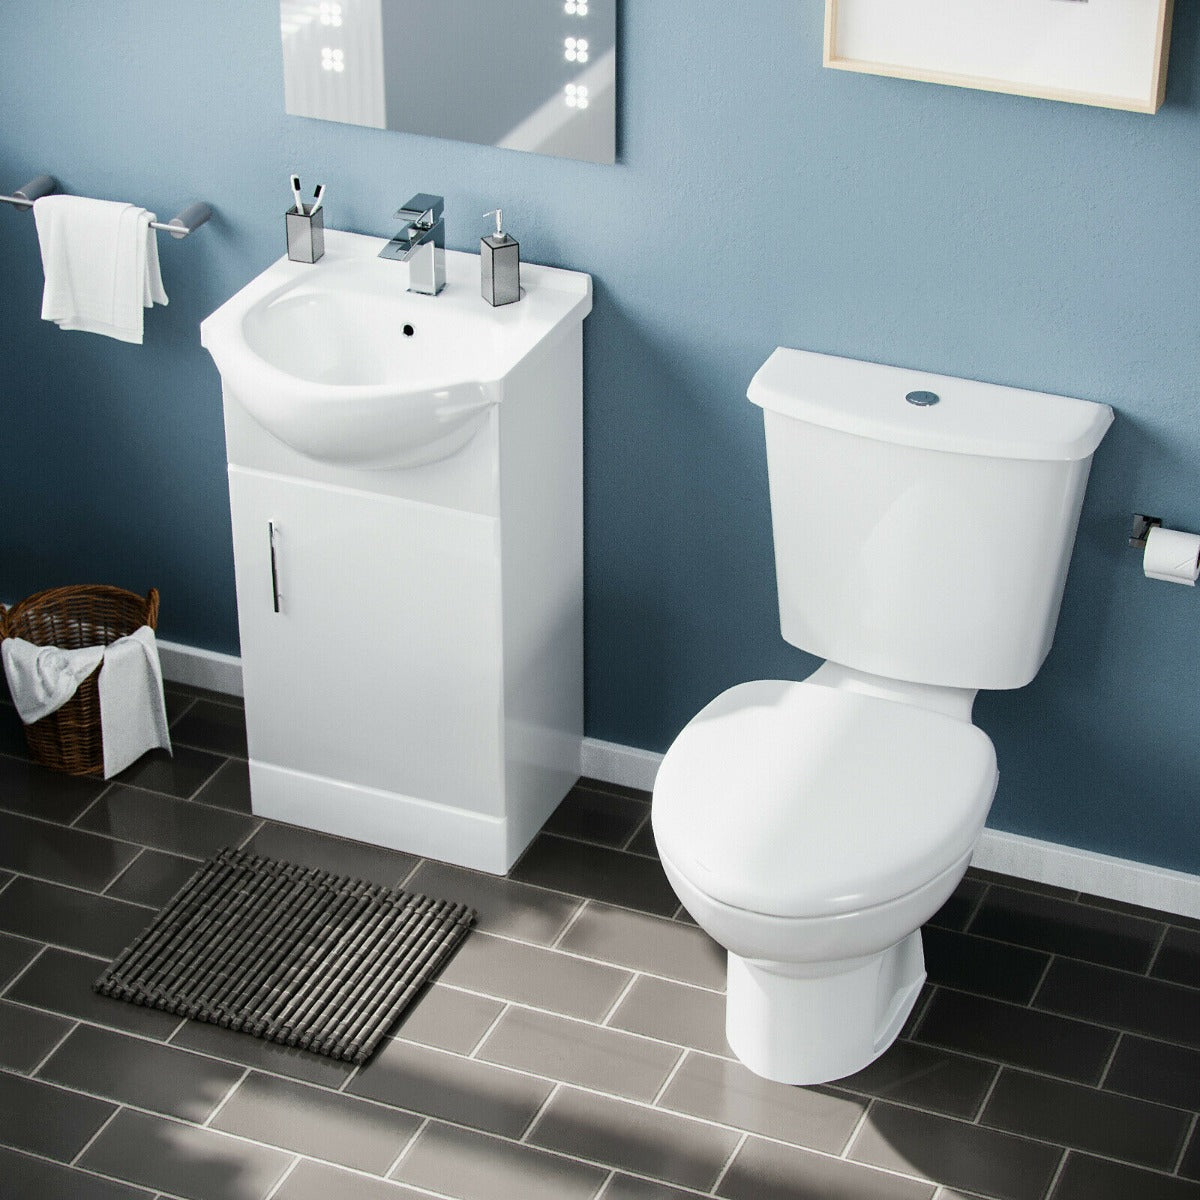 Ellen 450mm Cloakroom Basin Sink Vanity Cabinet Unit with WC Toilet Set